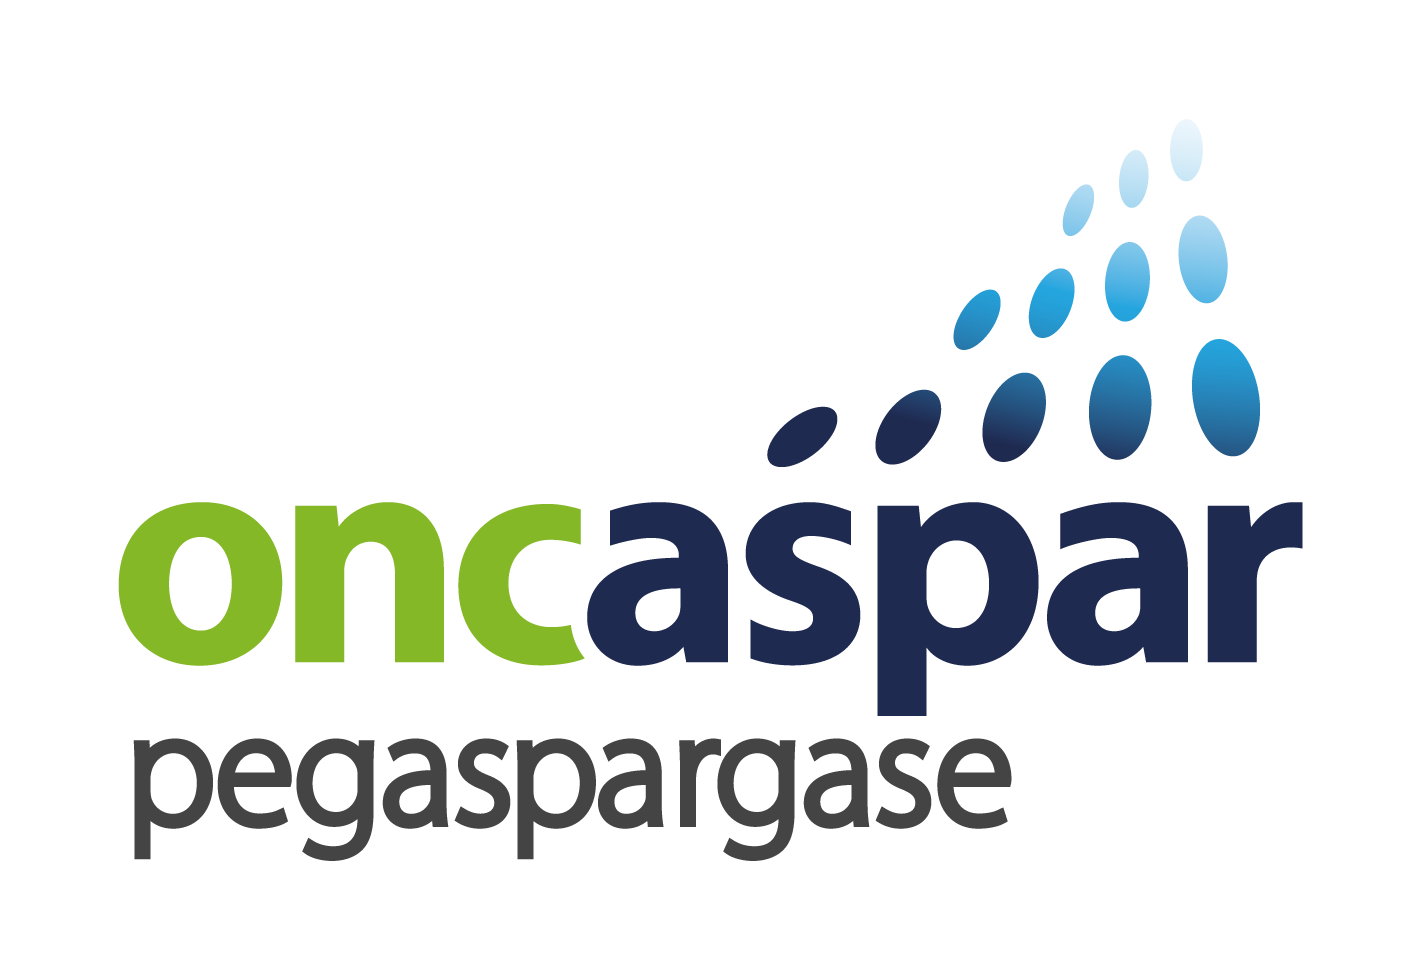 Oncaspar / Онкаспар (пегаспаргаза) — новый логотип